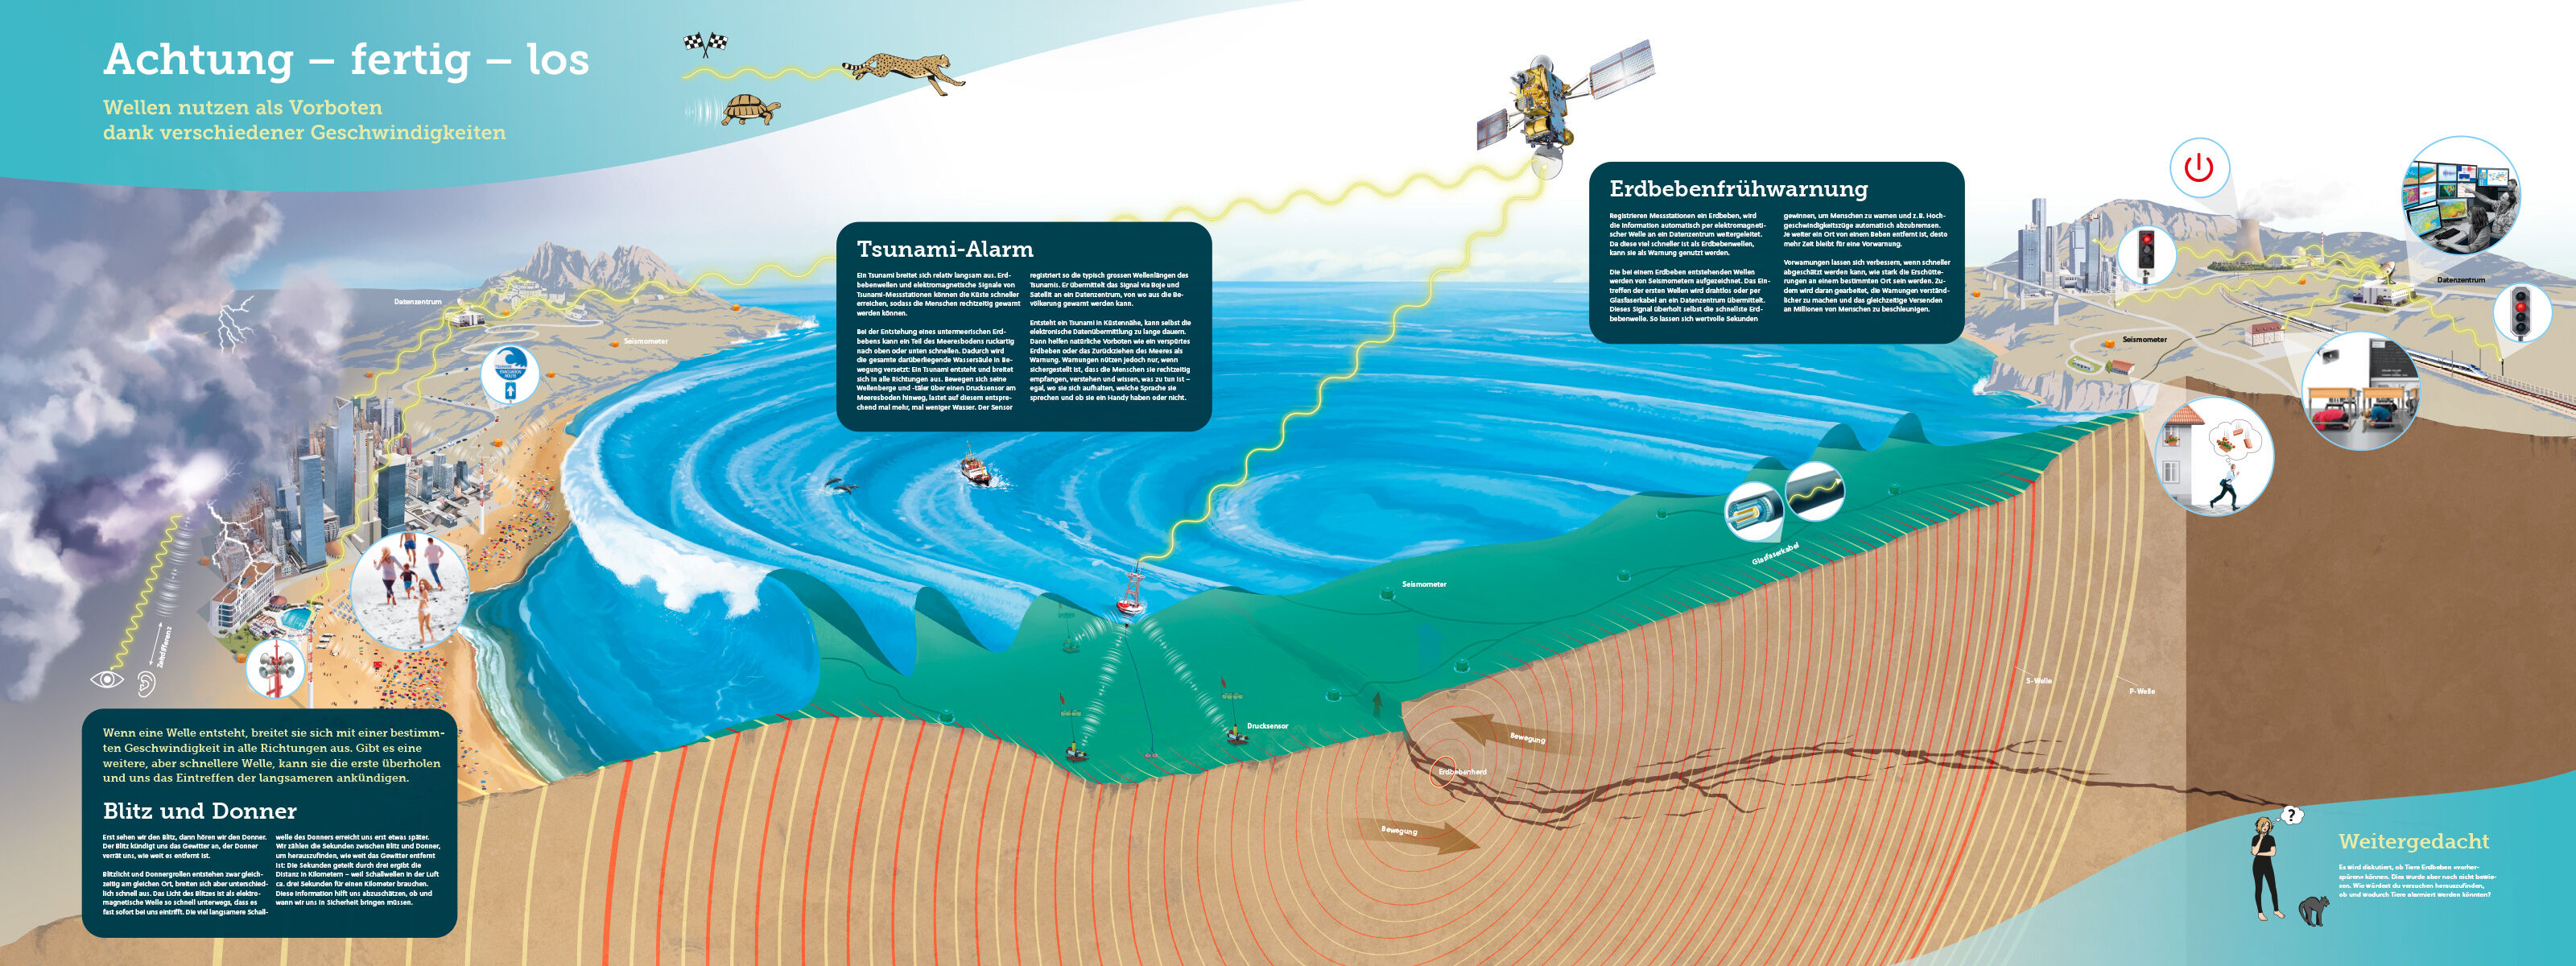 oculus-illustration-wissenschaft-eth-focusterra-ausstellung-wellen-tsunami